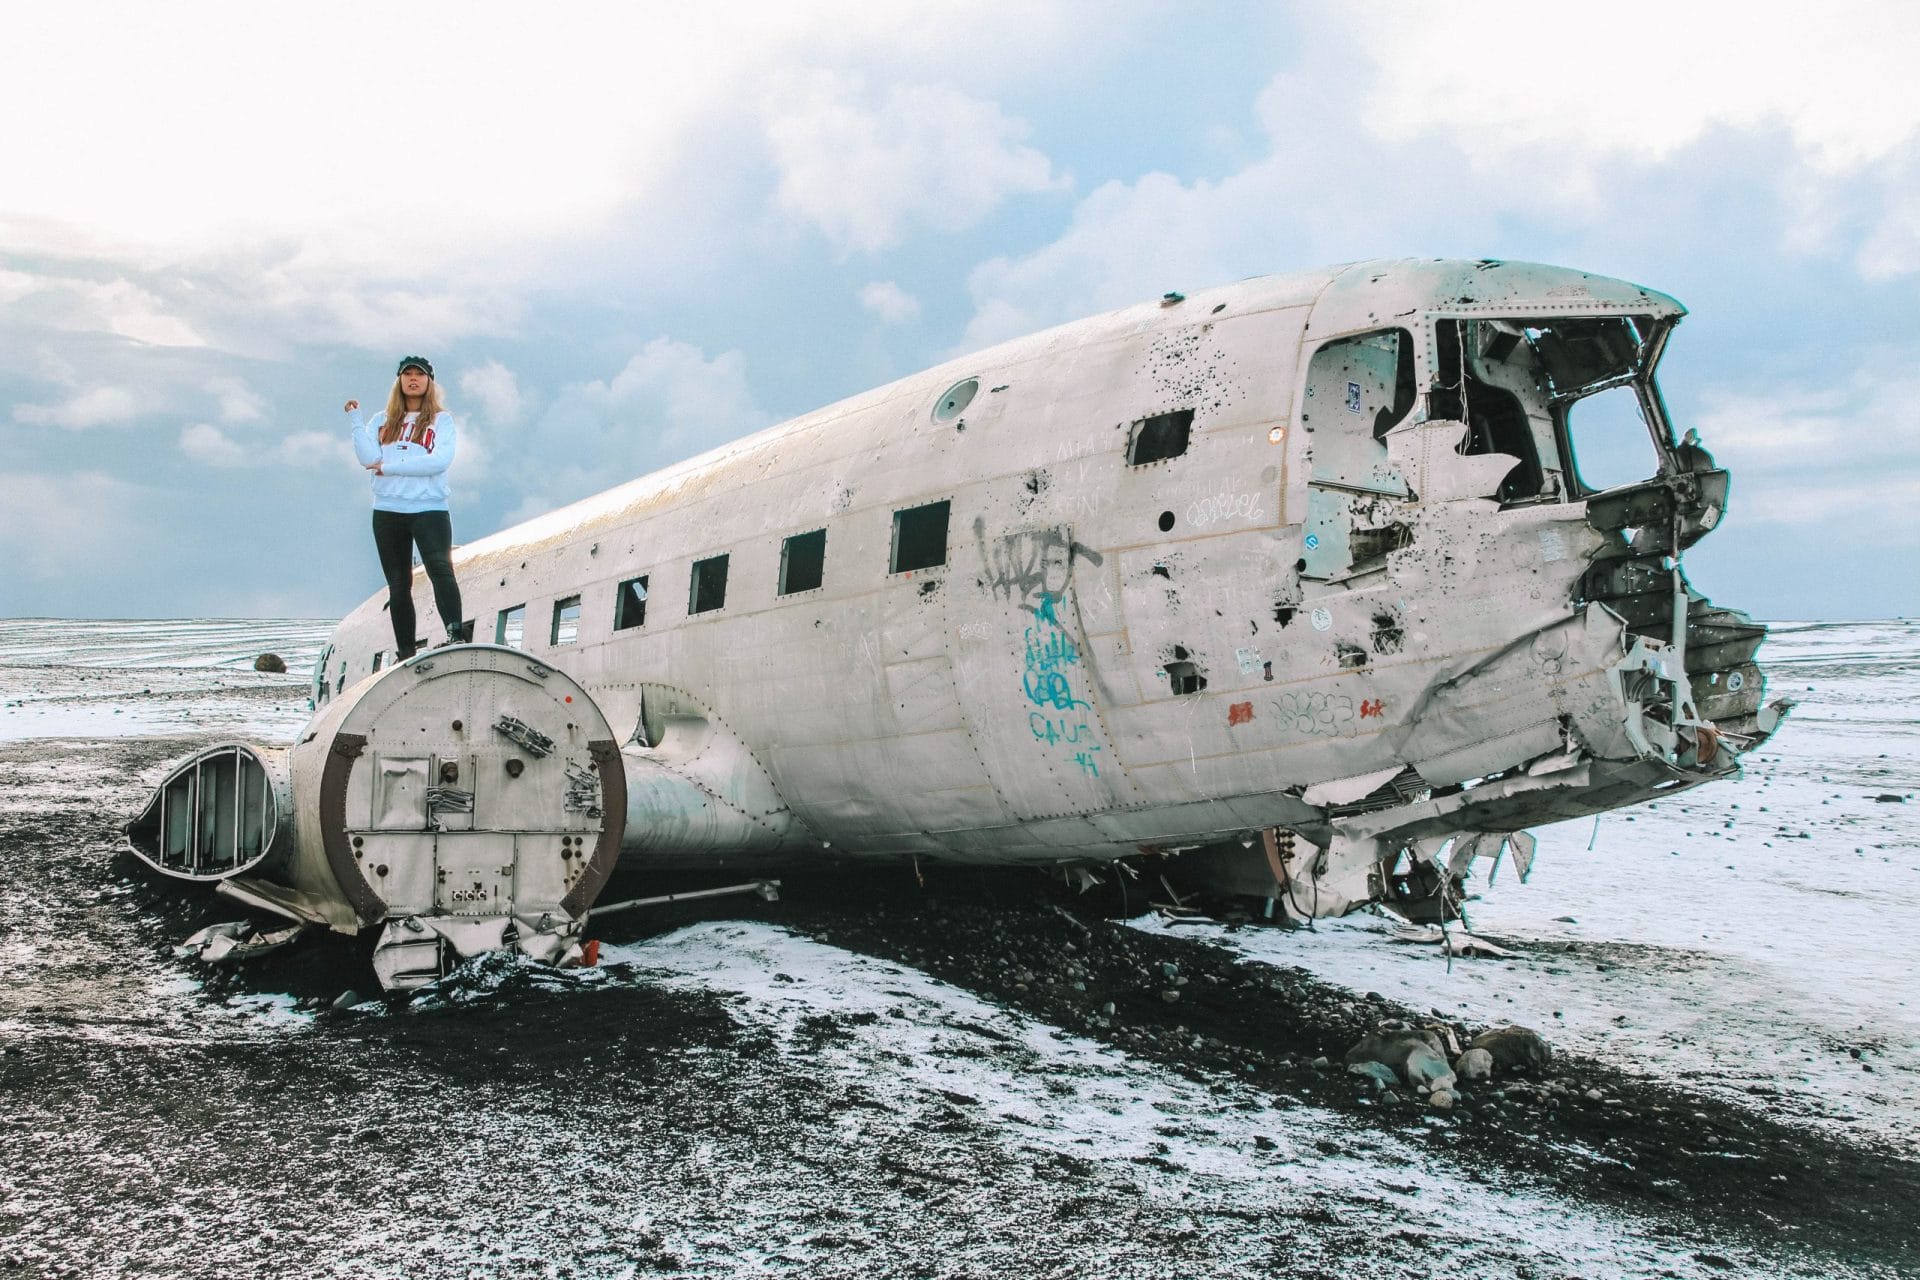 DC-3 Plane Wreck - Road trip Iceland